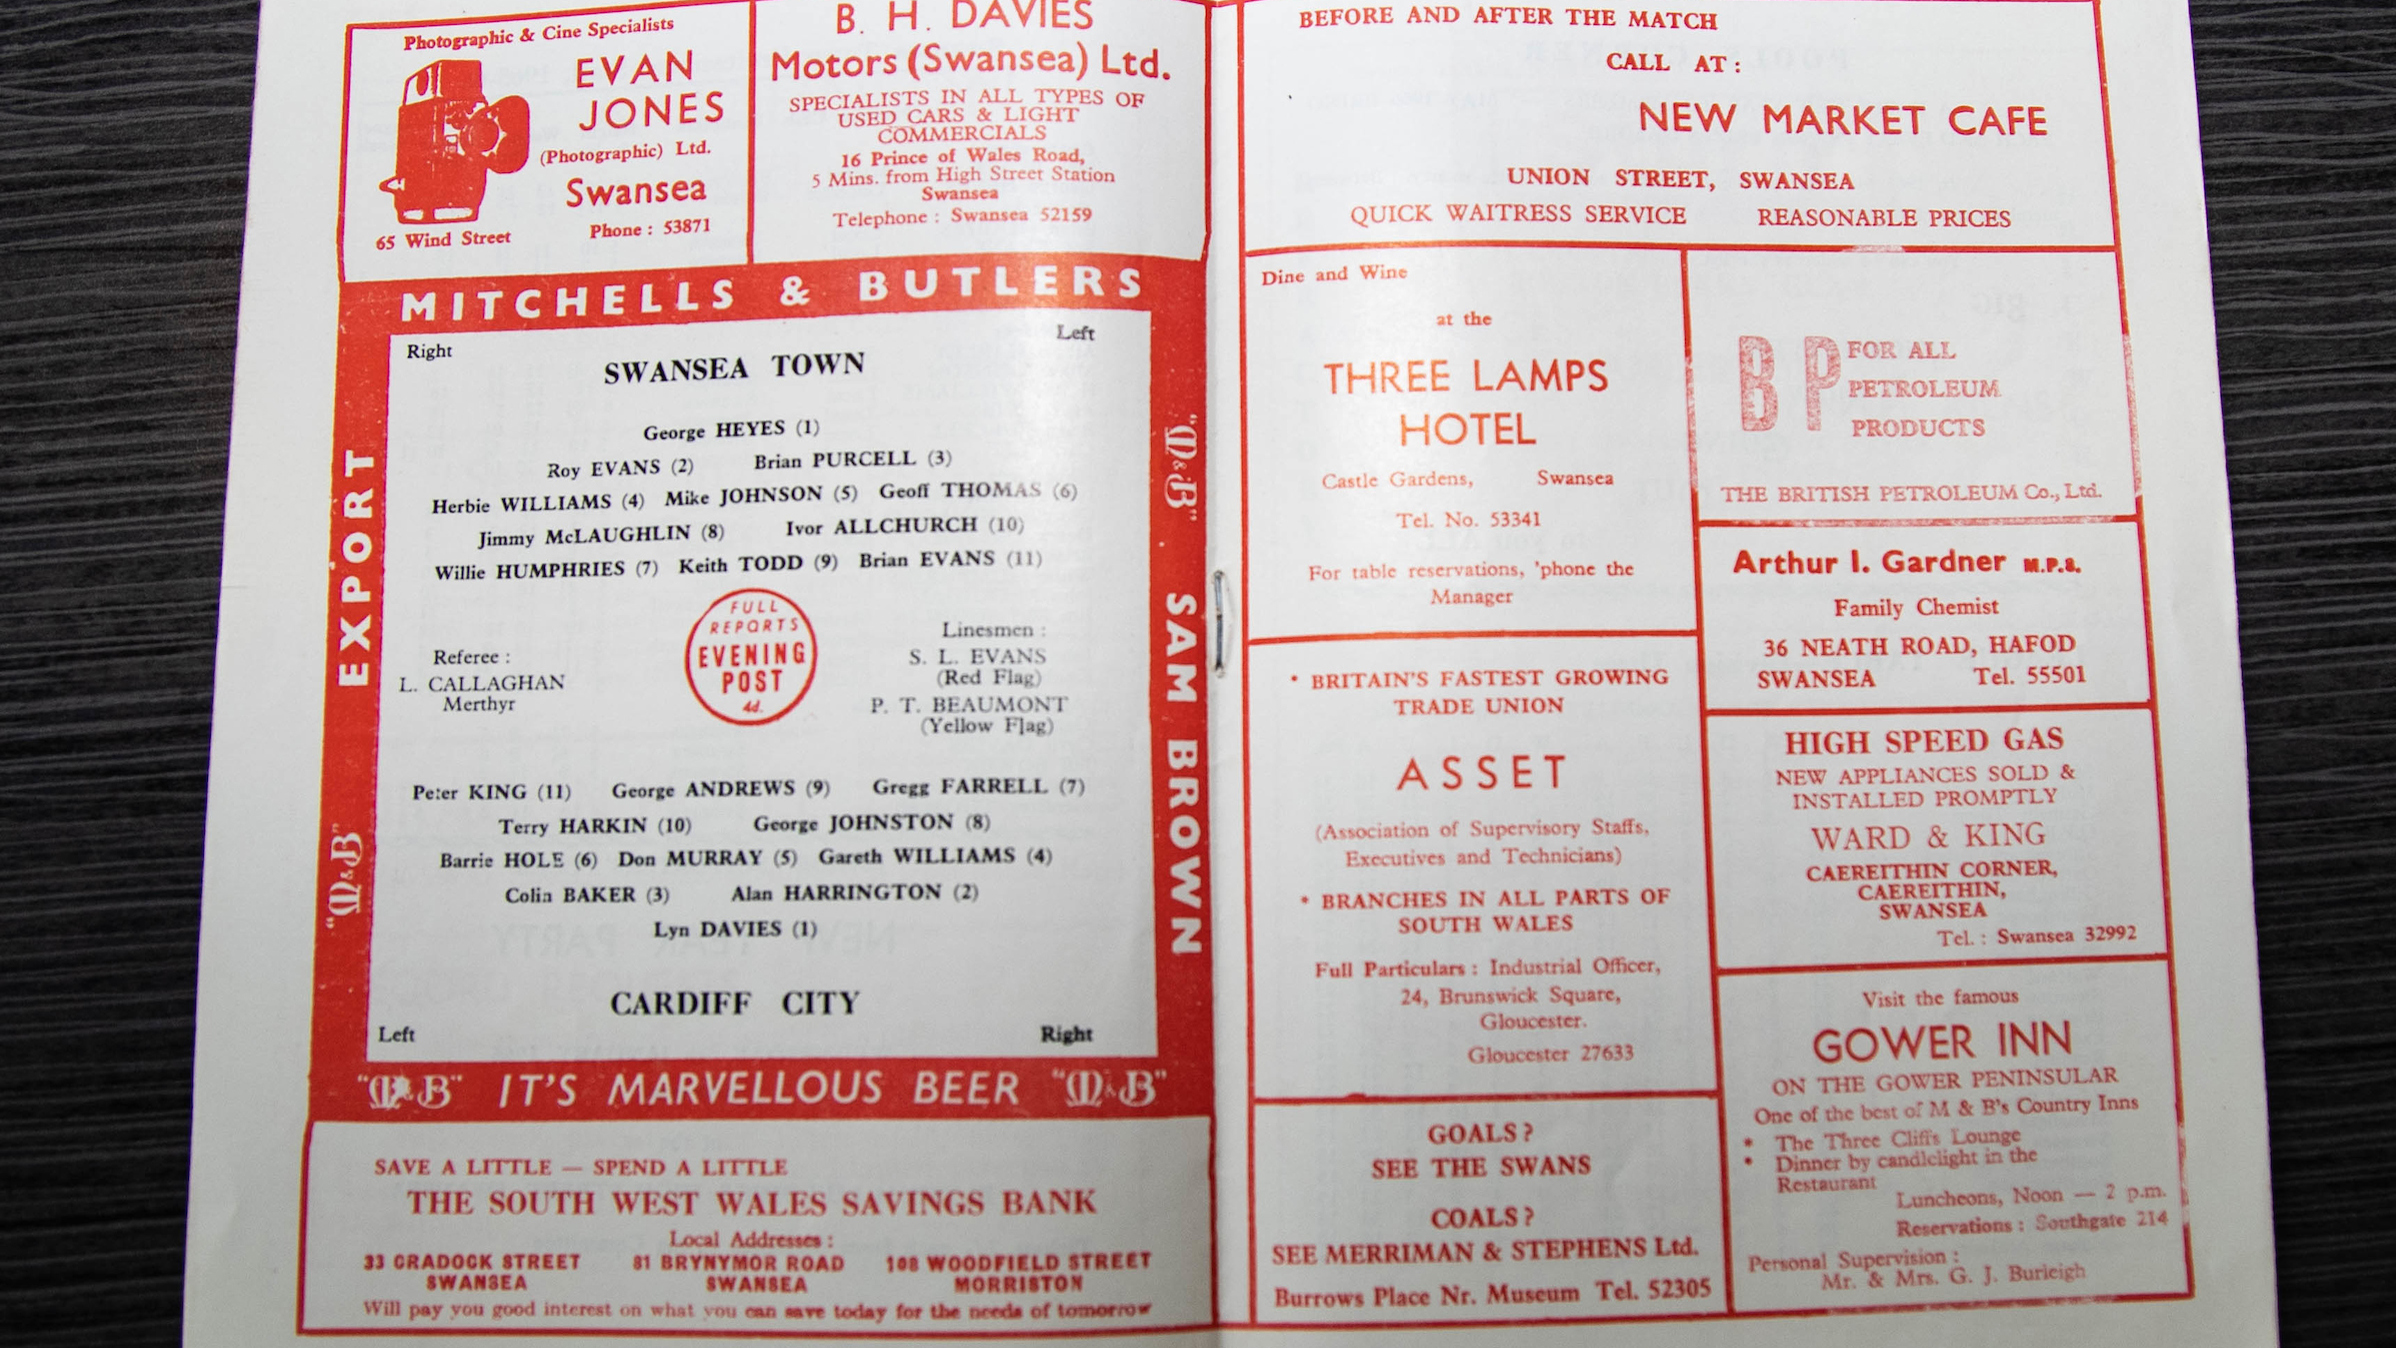 1966 Welsh Cup original programme